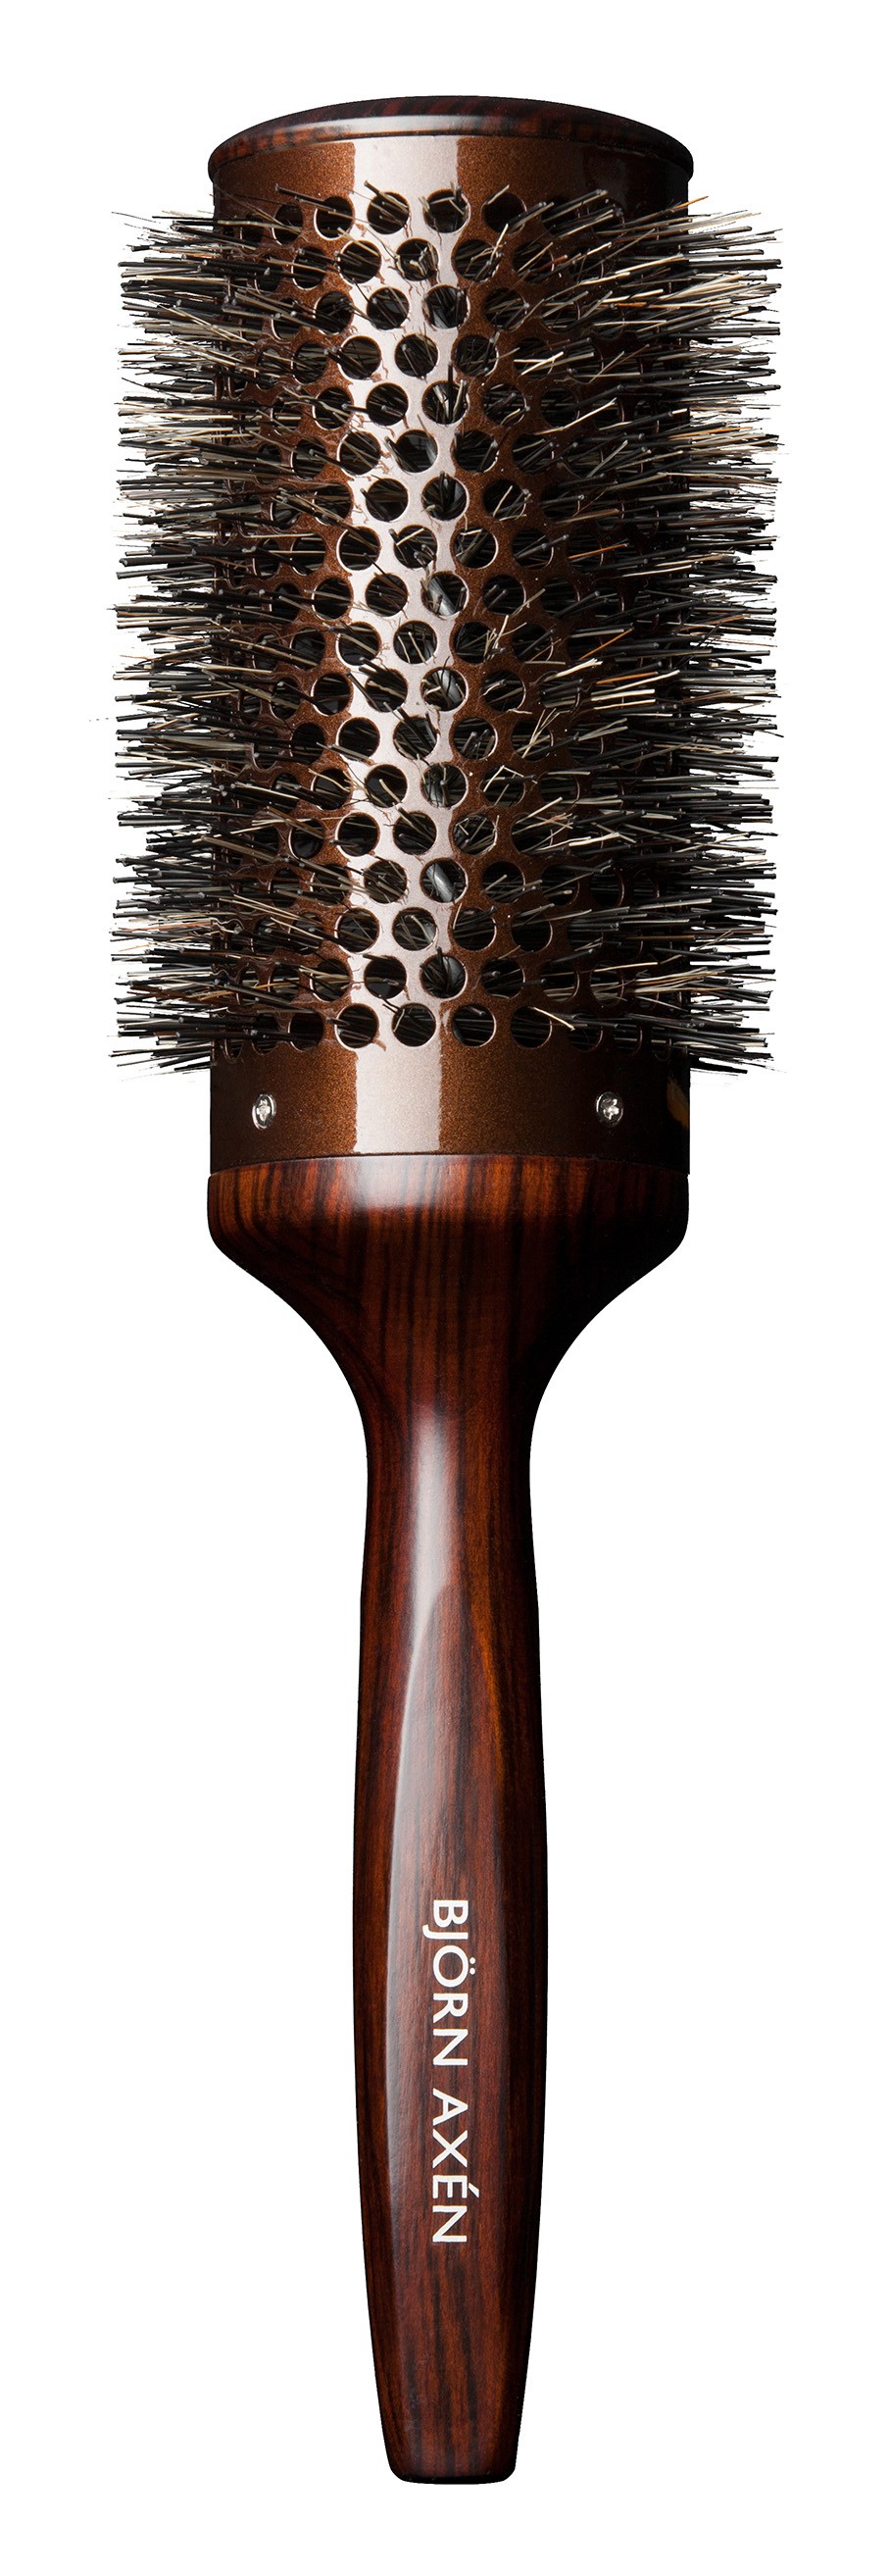 Björn Axen Maple Wood Blowout Brush For Long Hair